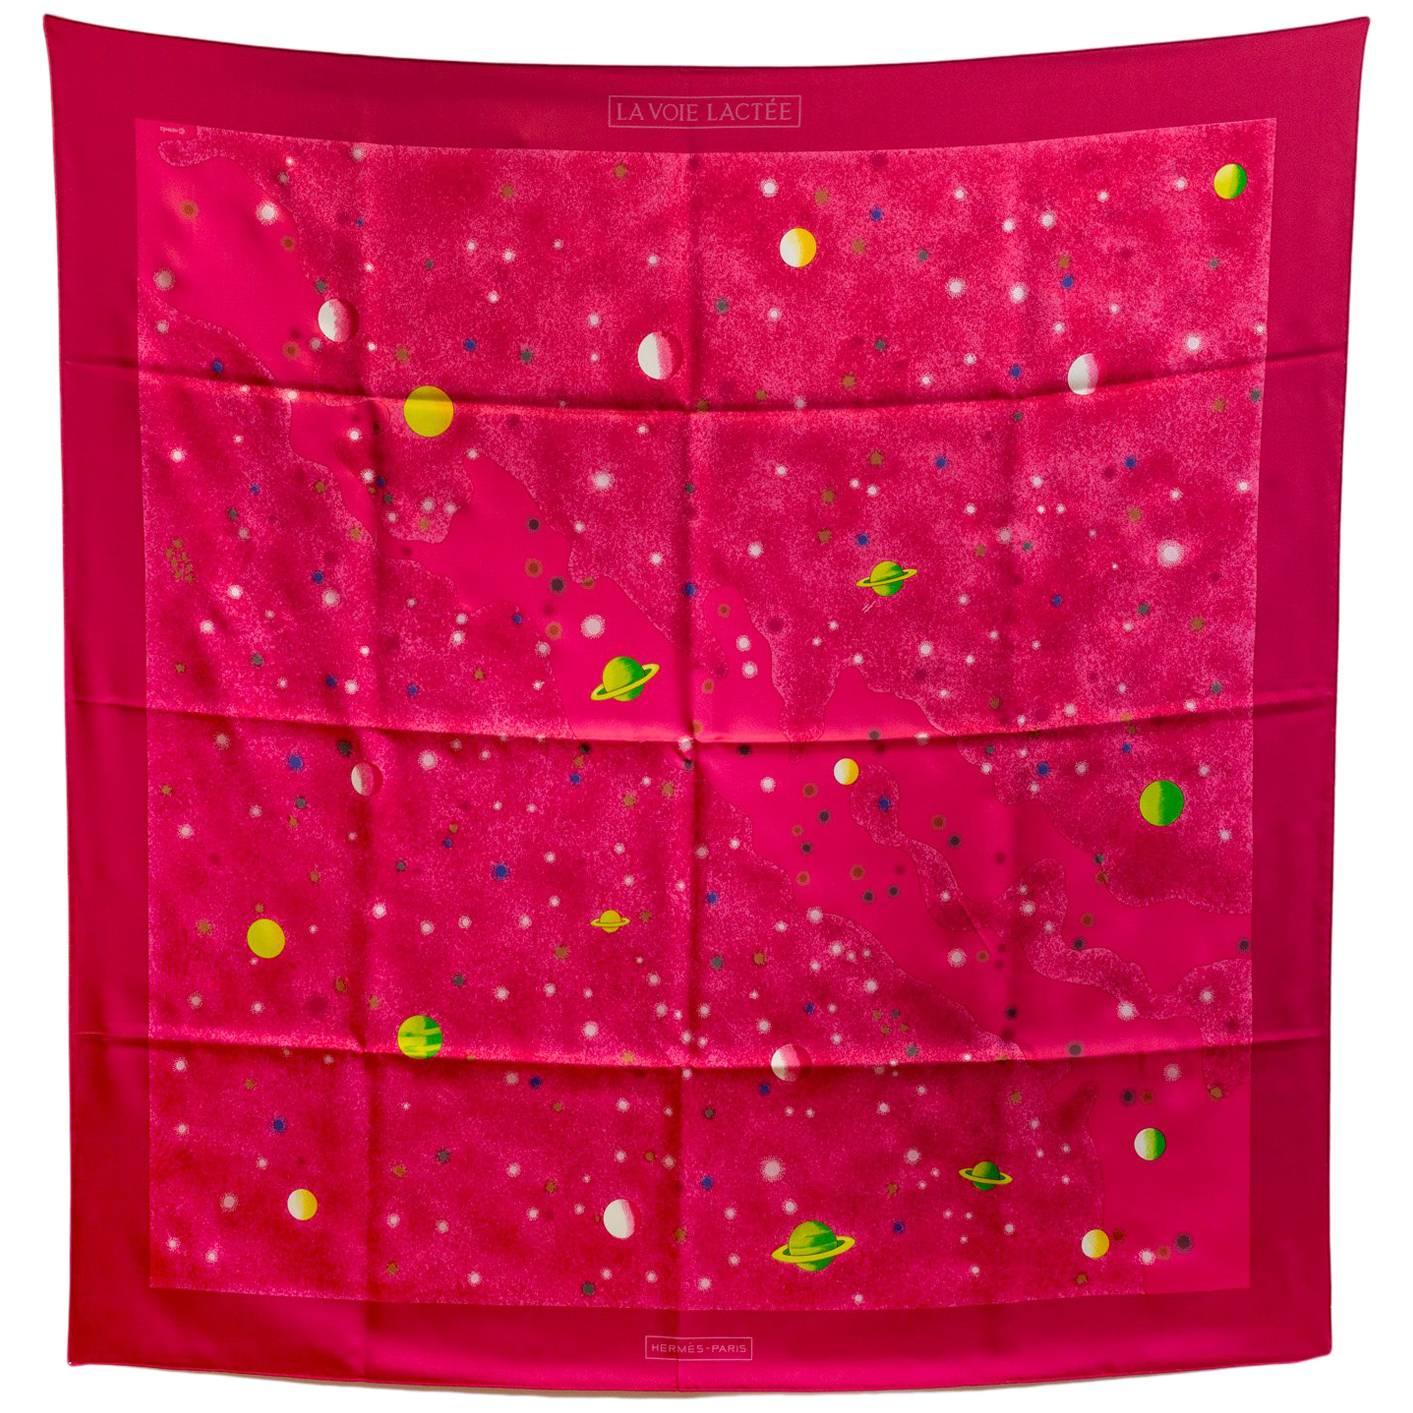 Hermes Pink Galaxy "La Voie Lactee" Silk 90cm Scarf with Box